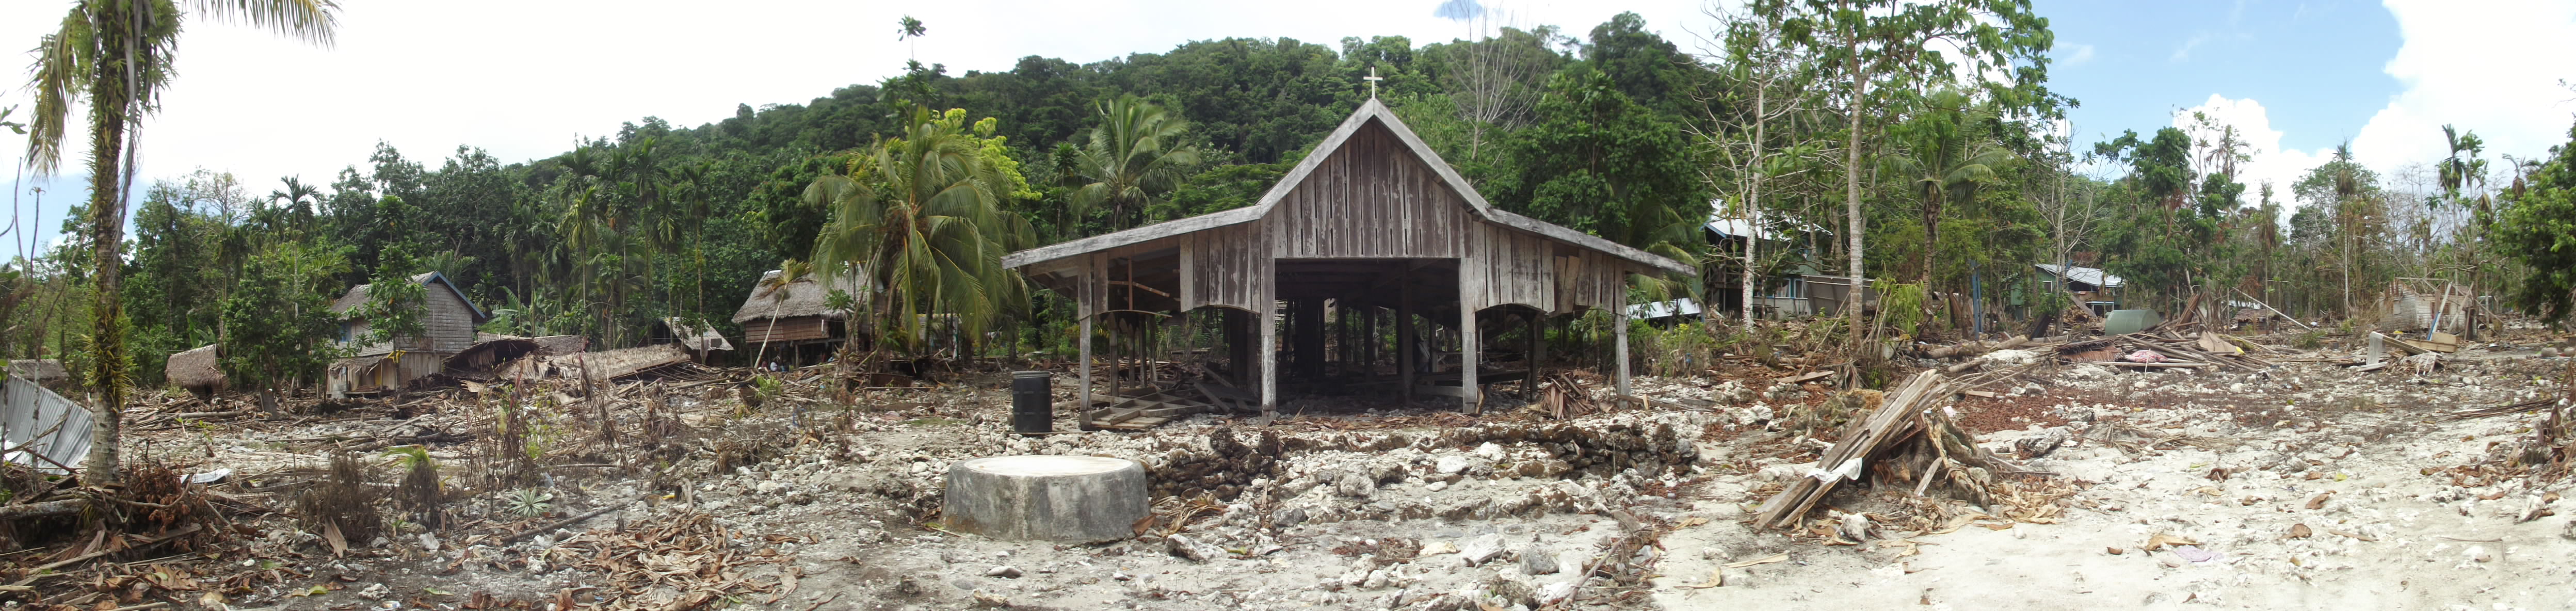 Santa Cruz Island after a tsunami swept through the area